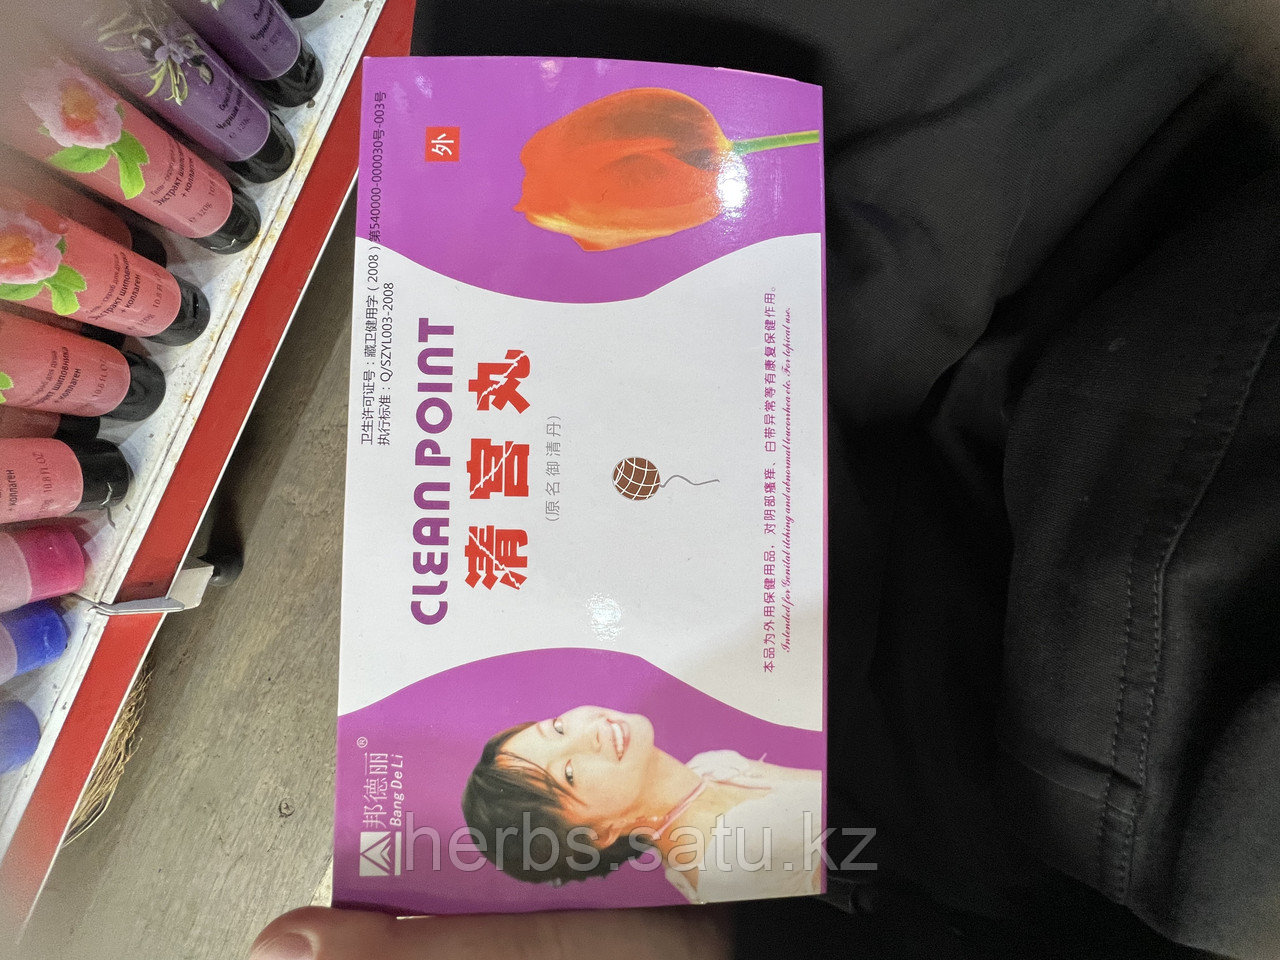 Clean Point вагинальные лечебные шарики,цин гун